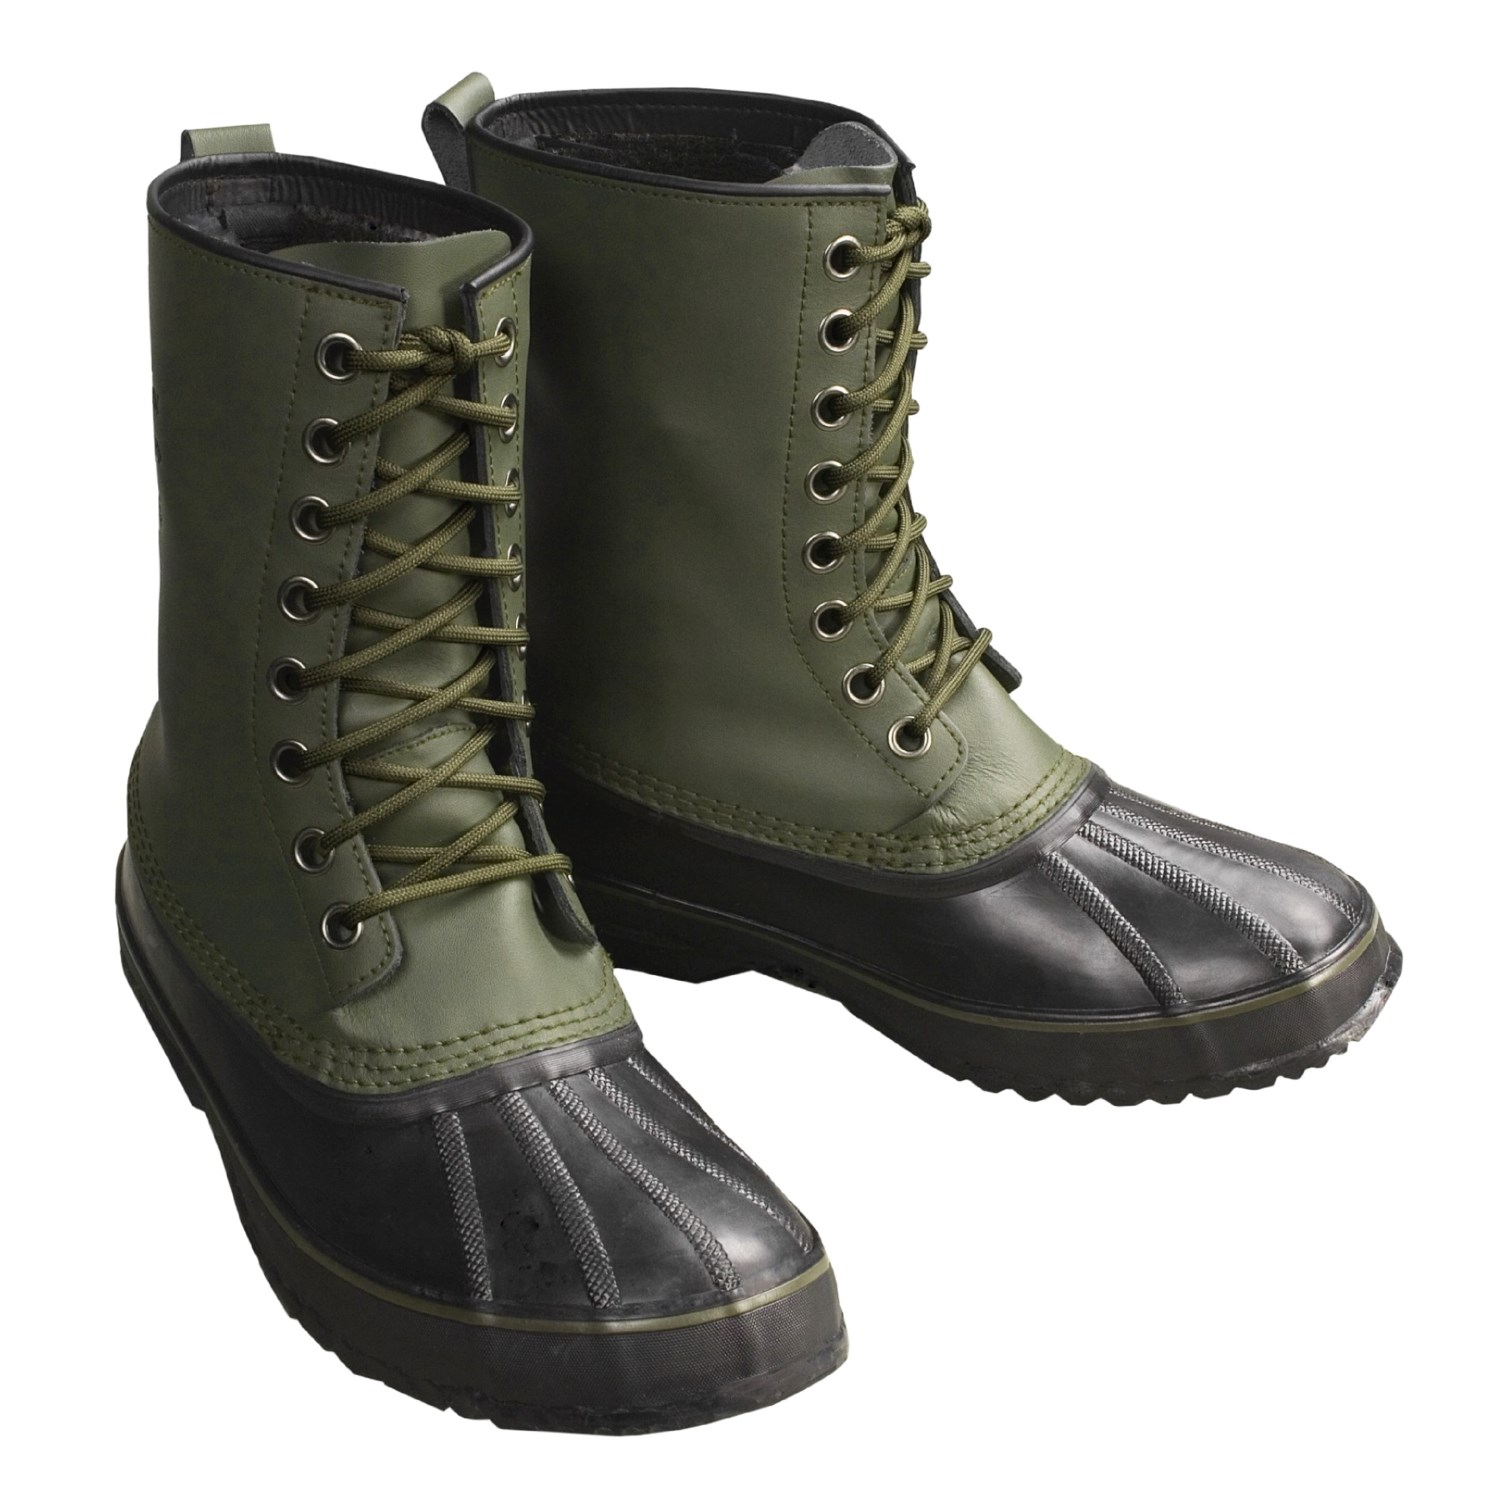 Sorel 1964 Premium Winter Boots (For Men) 72853